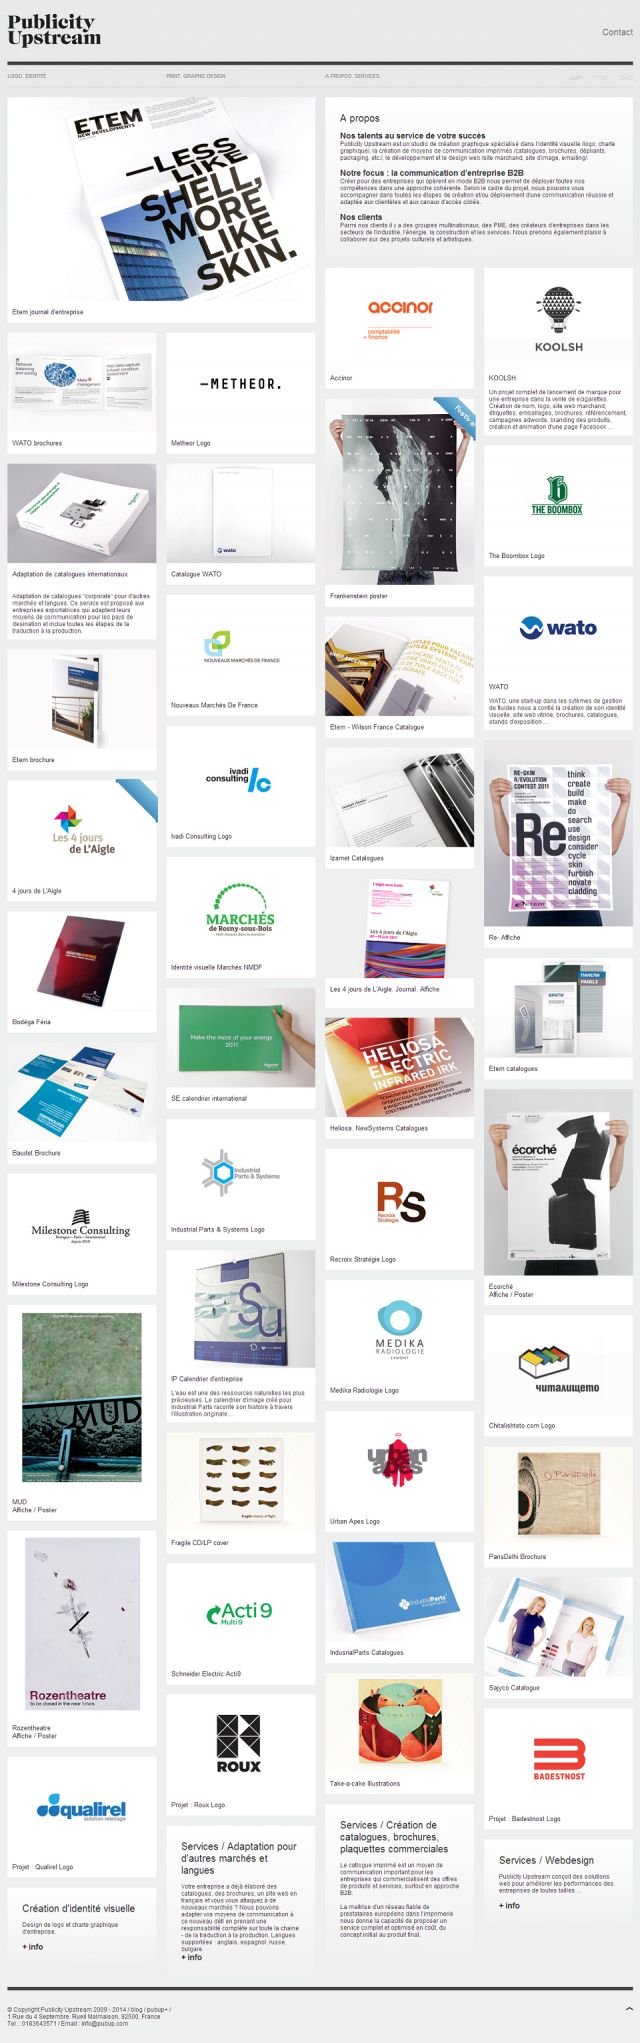 PubUp - Graphic design studio screenshot